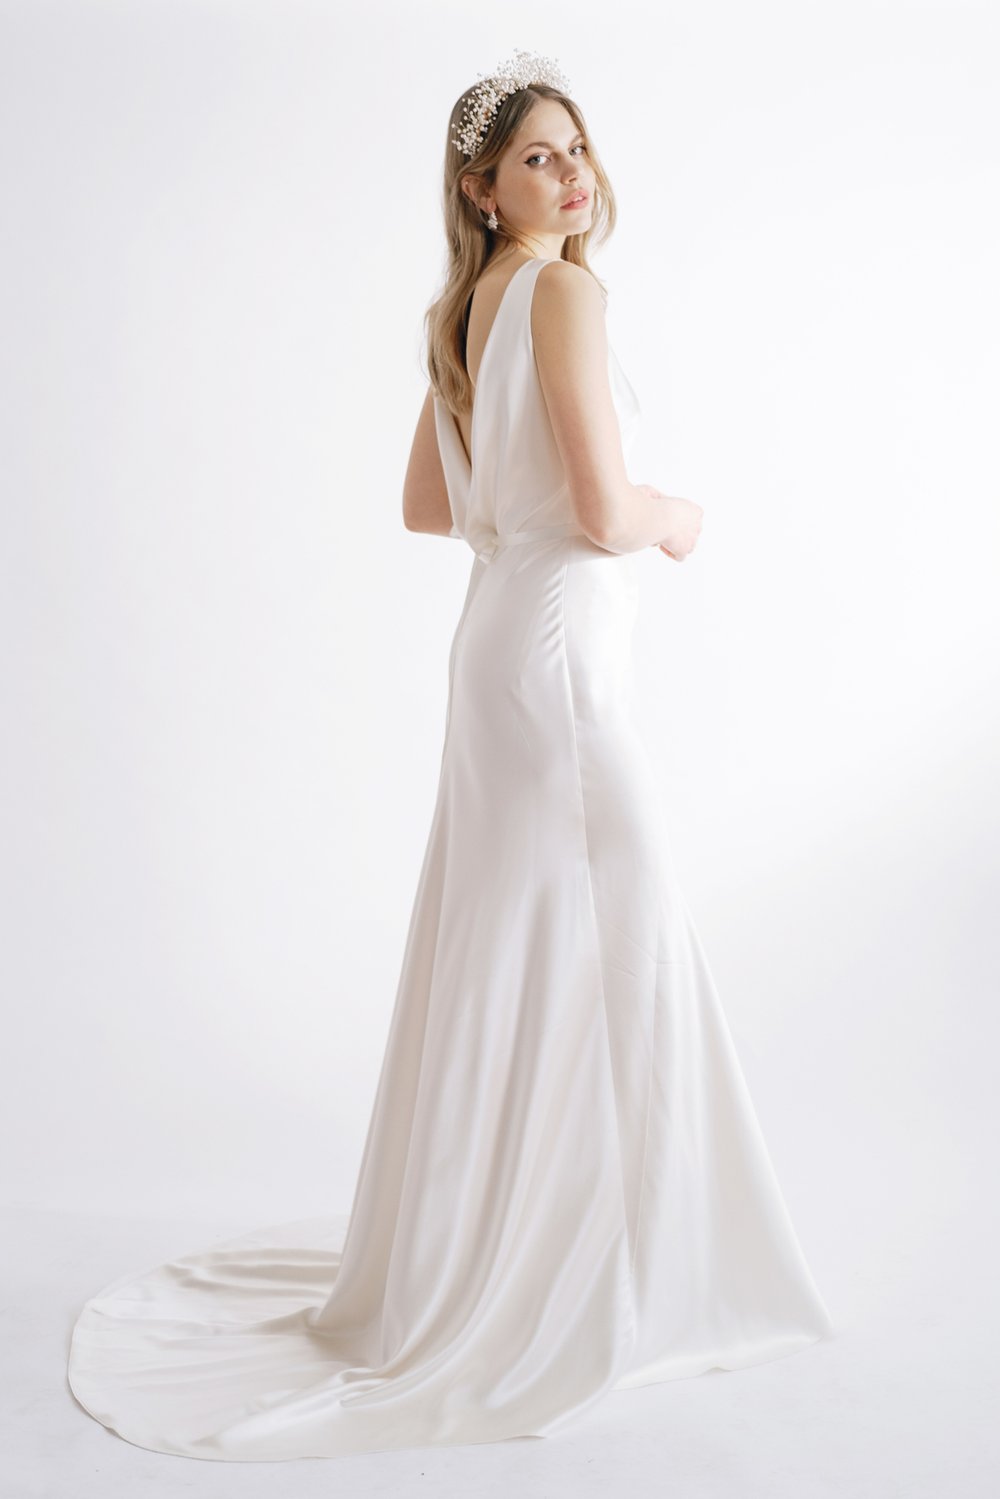 Gladioli silk wedding gown Kate Beaumont Sheffield 10.jpg